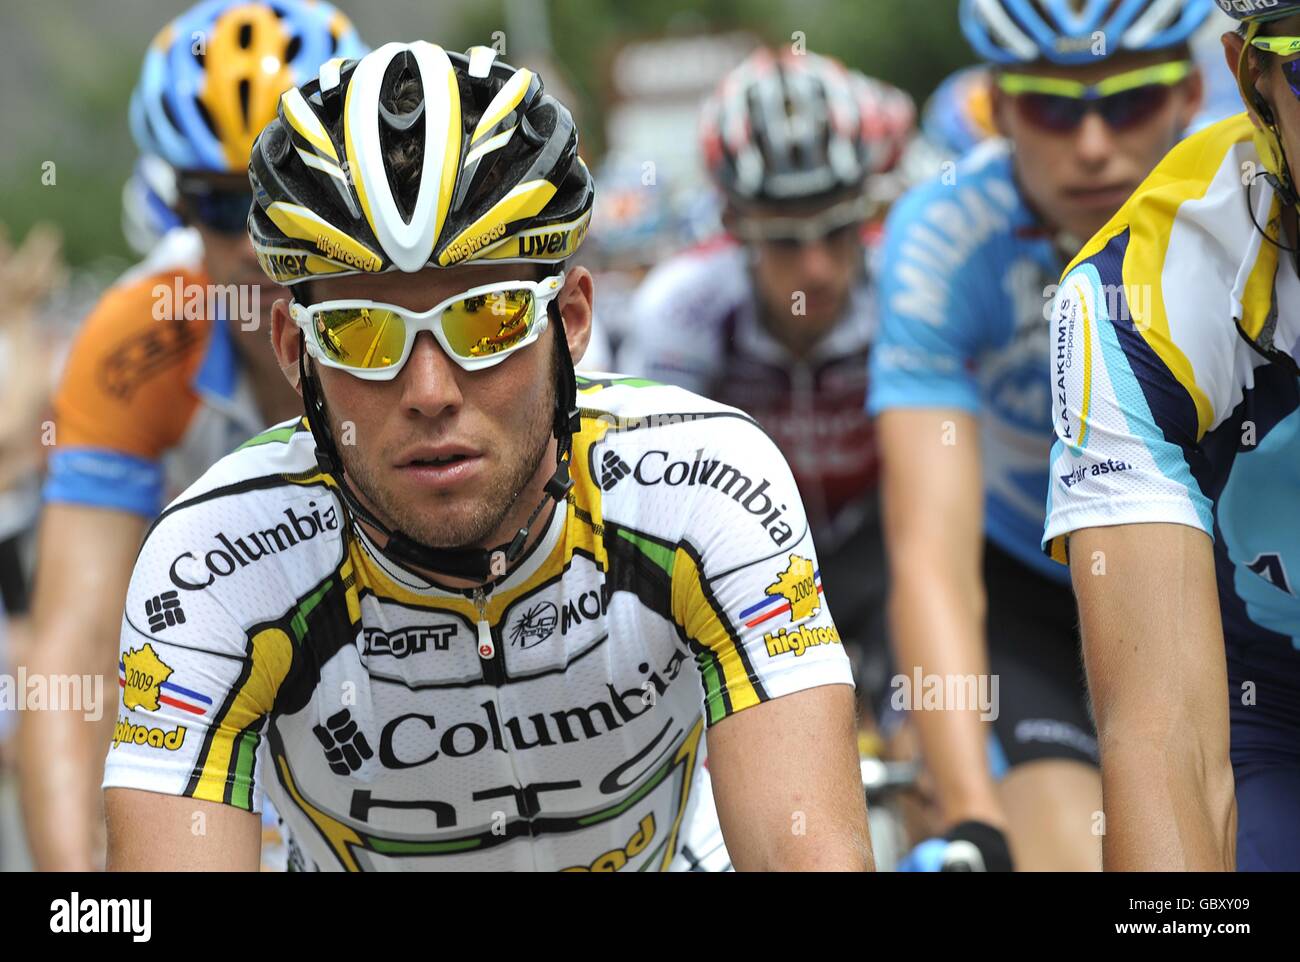 Mark Cavendish del equipo Columbia compitiendo en la decimosexta etapa del Tour de Francia entre Martigny y Bourg-Saint-Maurice. Foto de stock